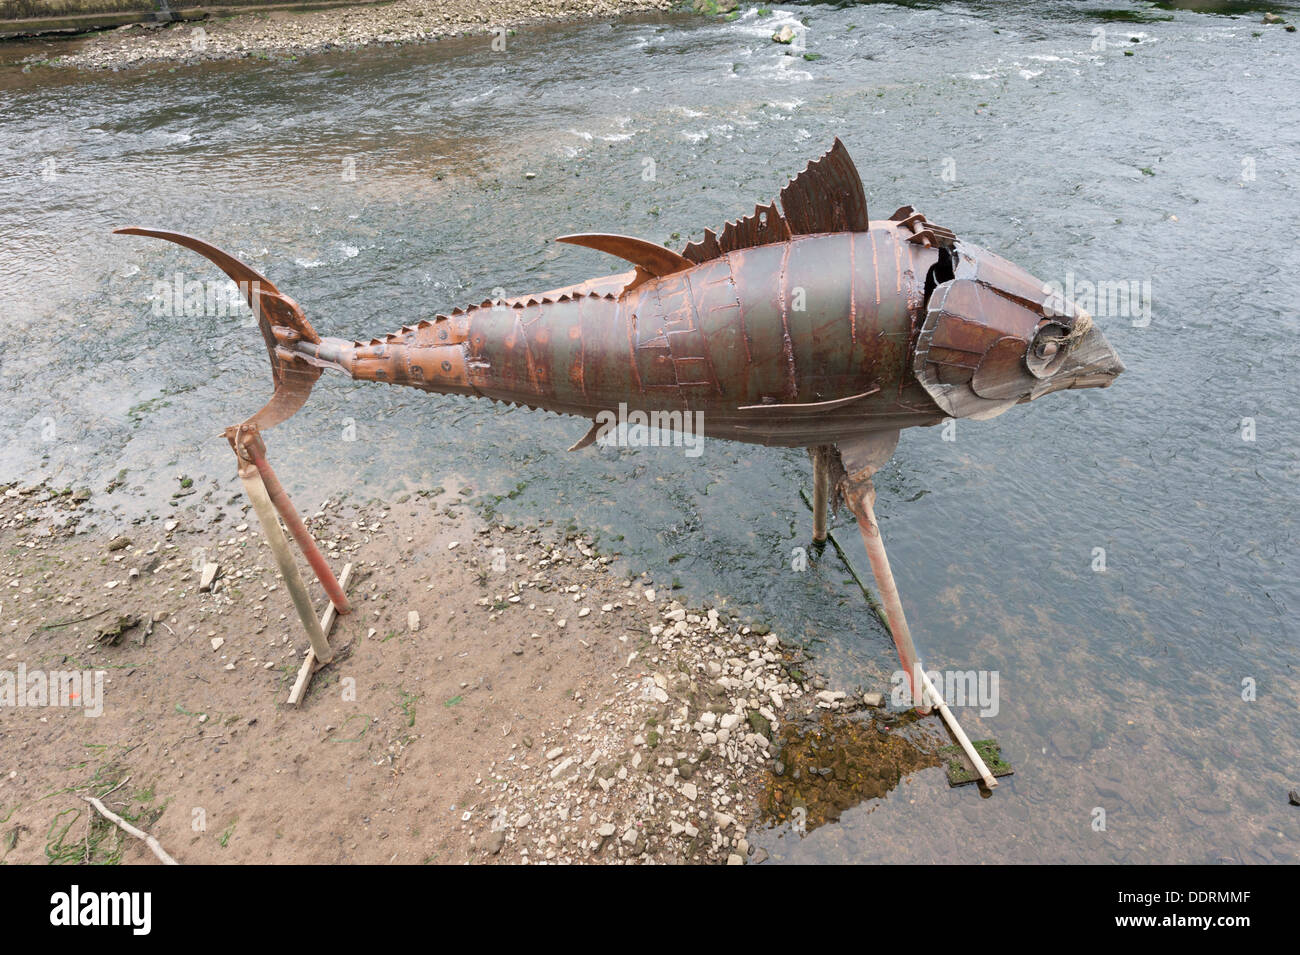 https://c8.alamy.com/comp/DDRMMF/large-metal-fish-sculpture-in-the-river-odet-quimper-brittany-france-DDRMMF.jpg